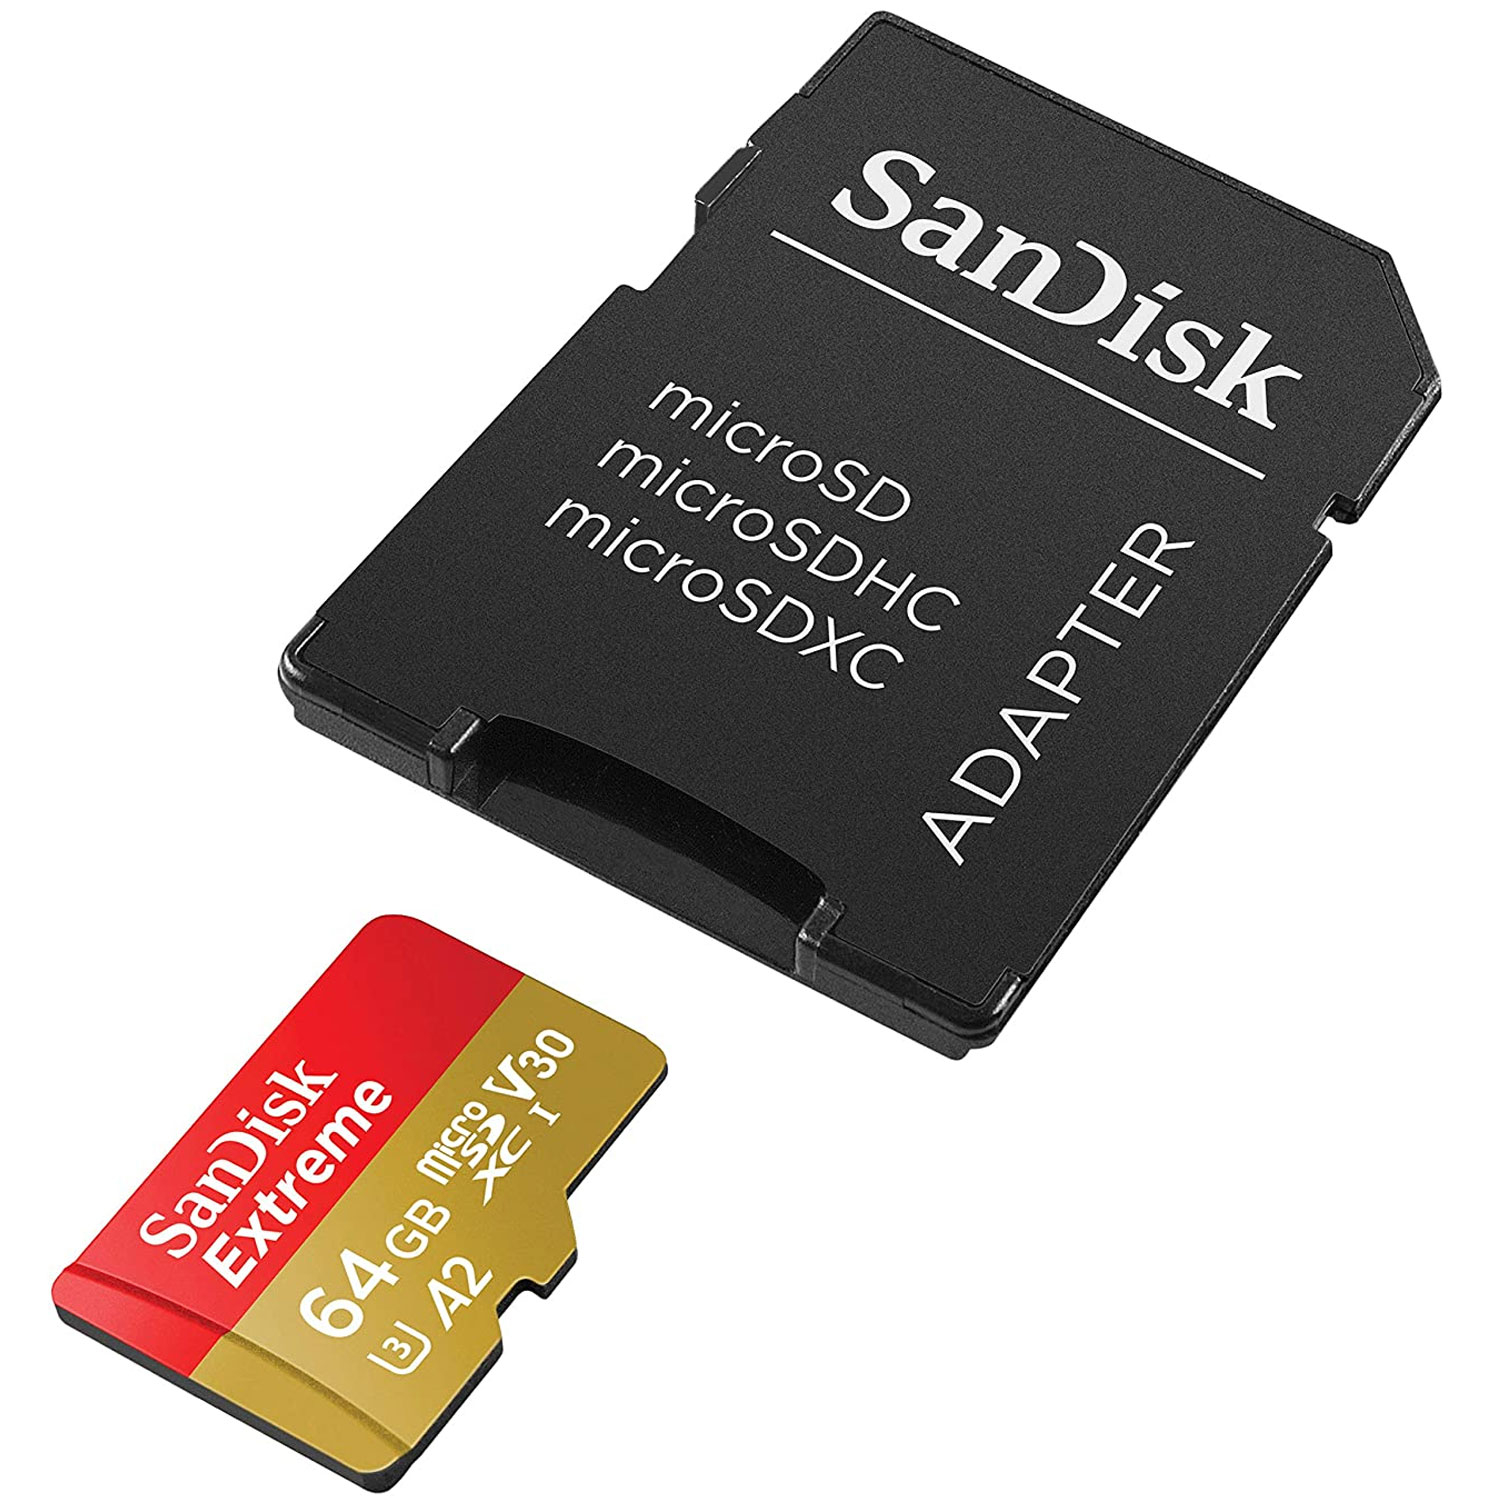 Memoria Micro SD 64GB Sandisk Extreme SDSQXA2-064G-GN6AA